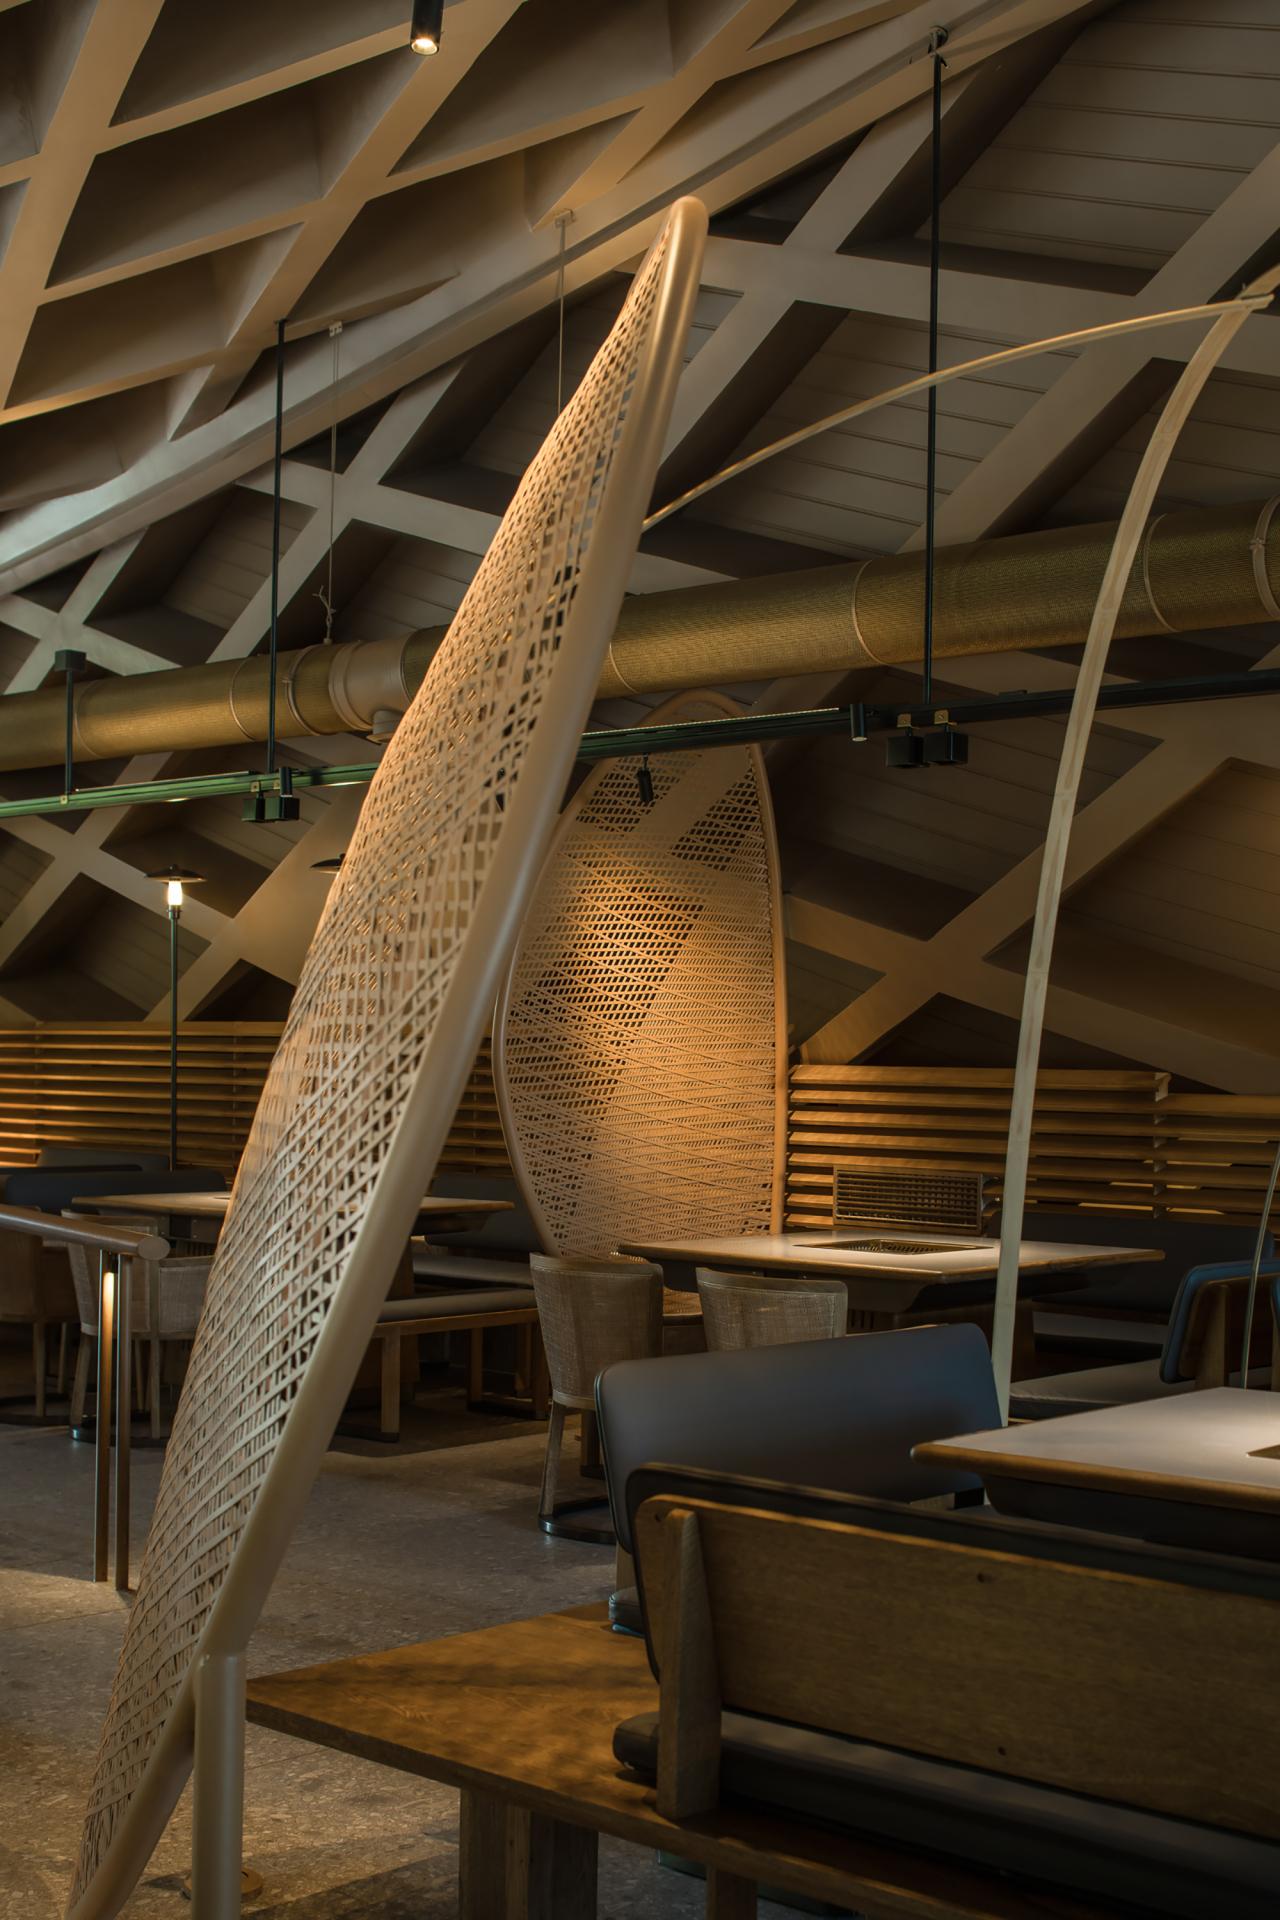 This modern hotpot restaurant in Sichuan is a stunning bamboo oasis